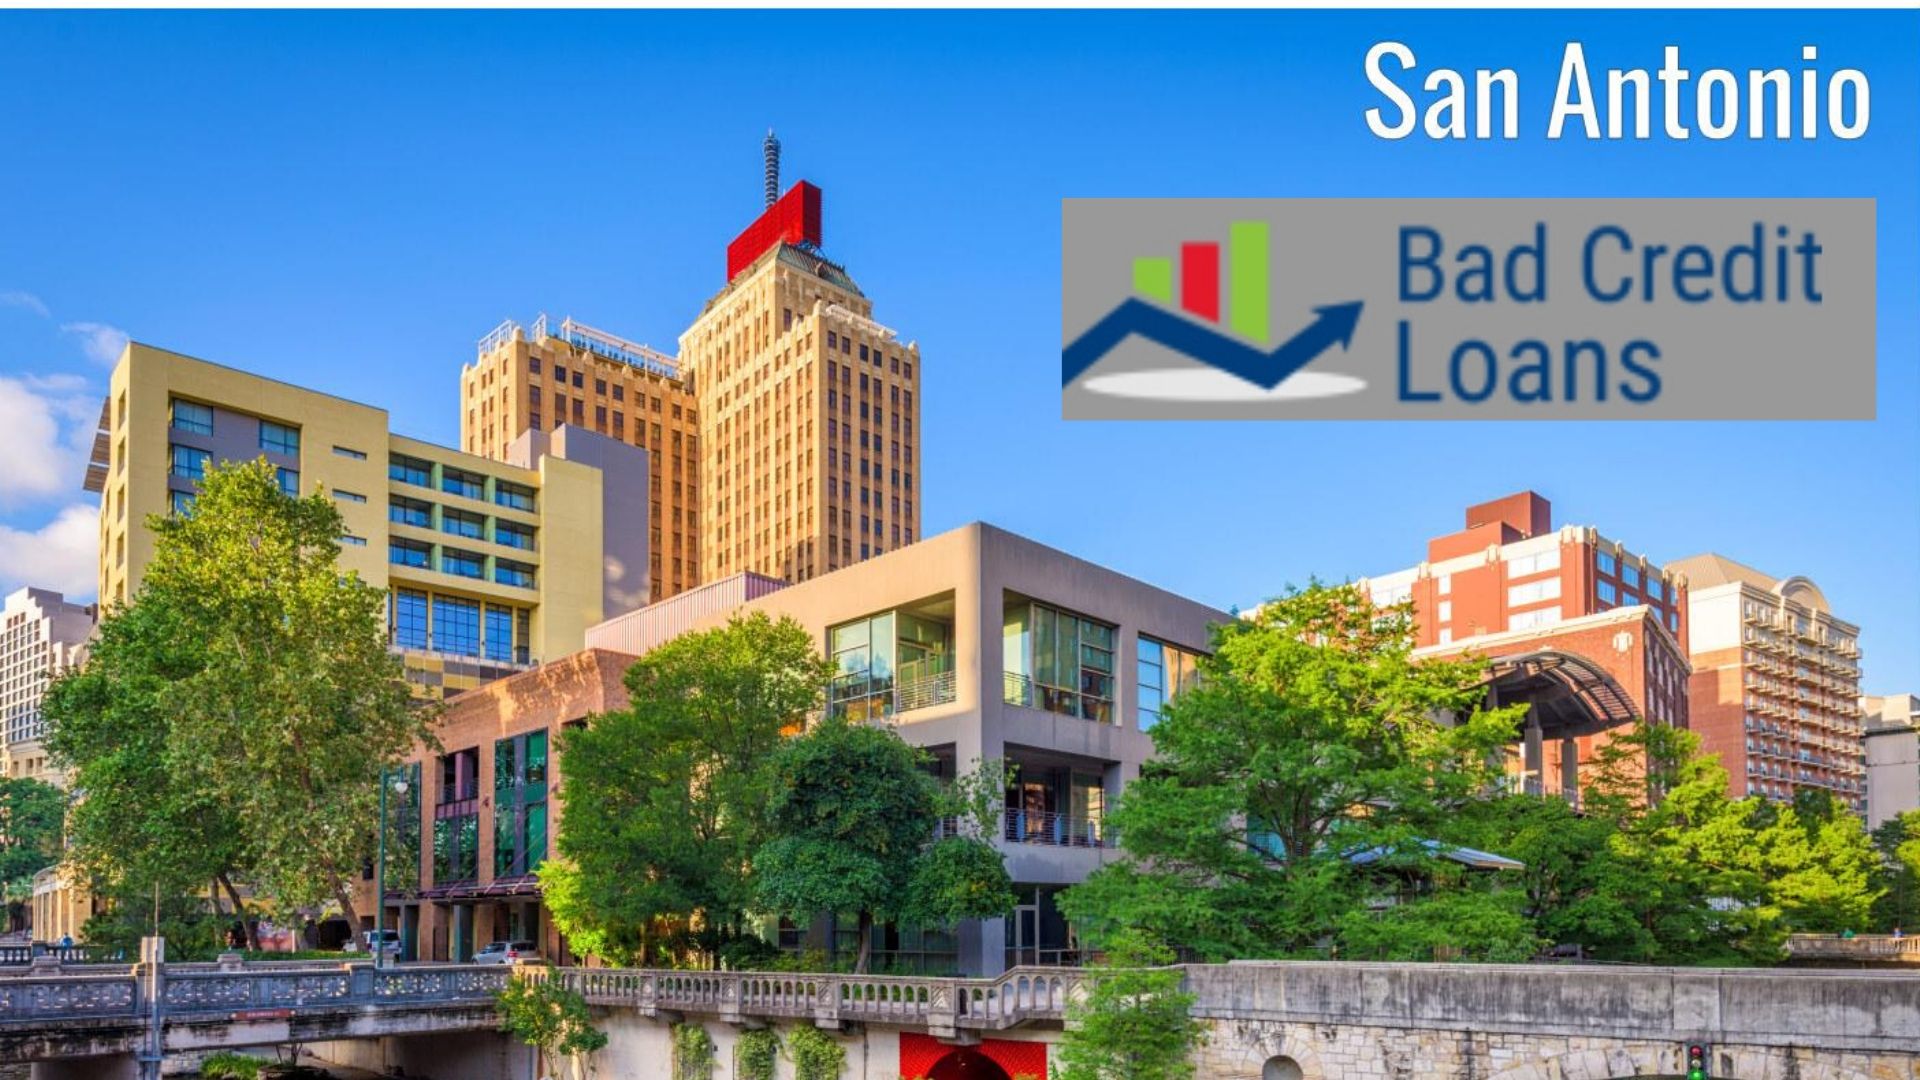 Bad Credit Loans San Antonio